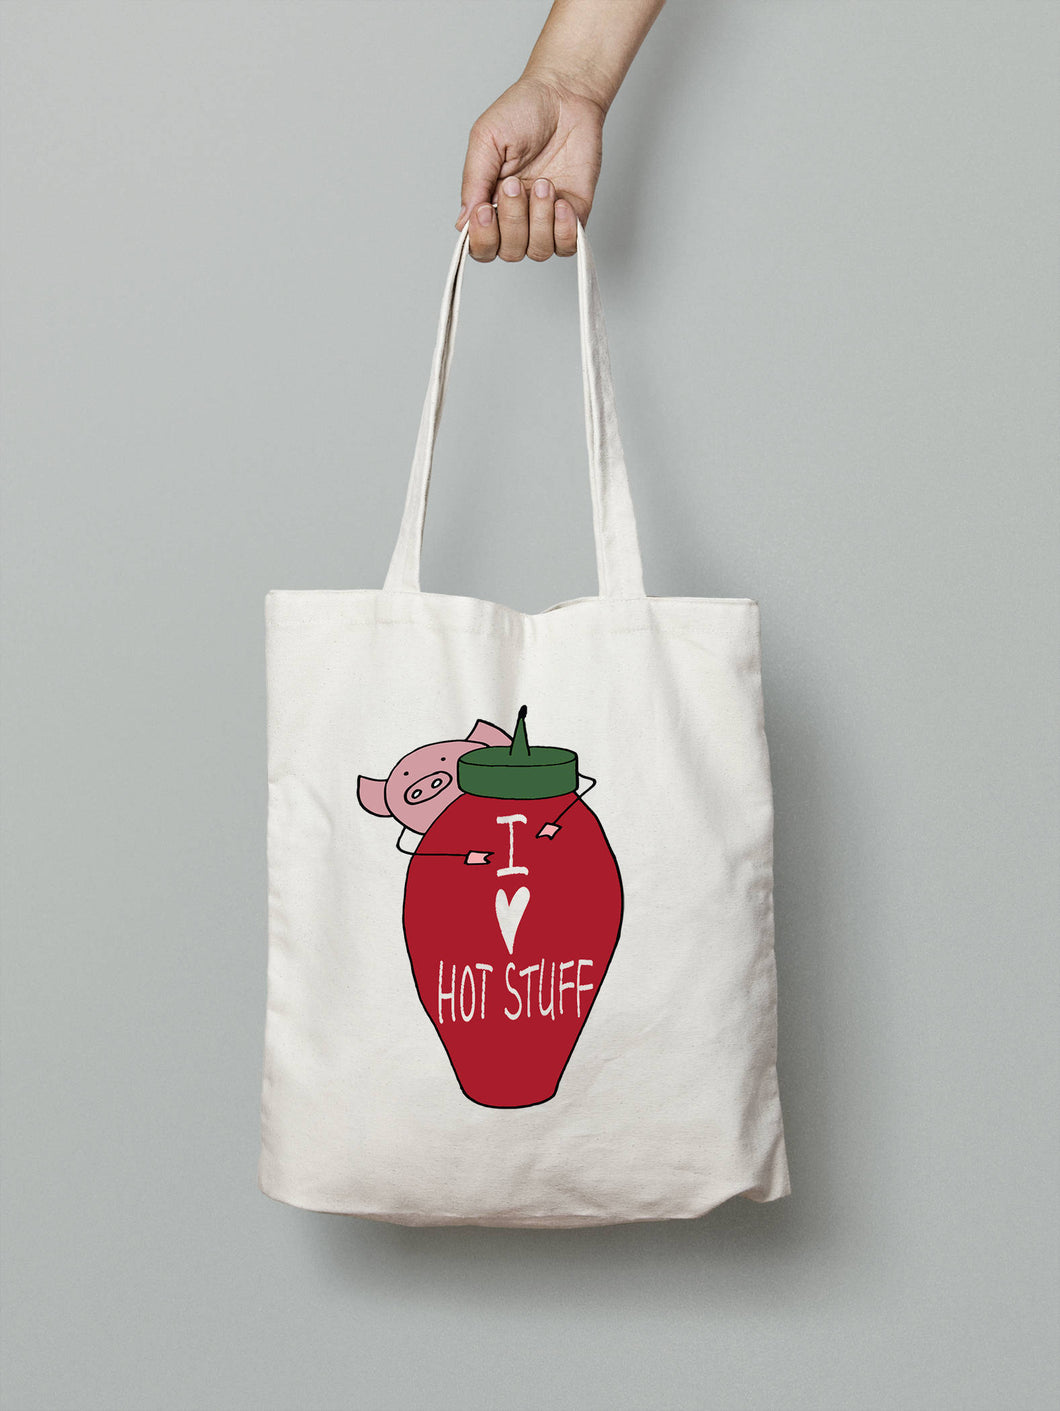 Sriracha tote bag cute - cotton tote bag for sriracha lover - hot sauce cotton grocery bag - i love hot sauce bag - i love sriracha tote bag